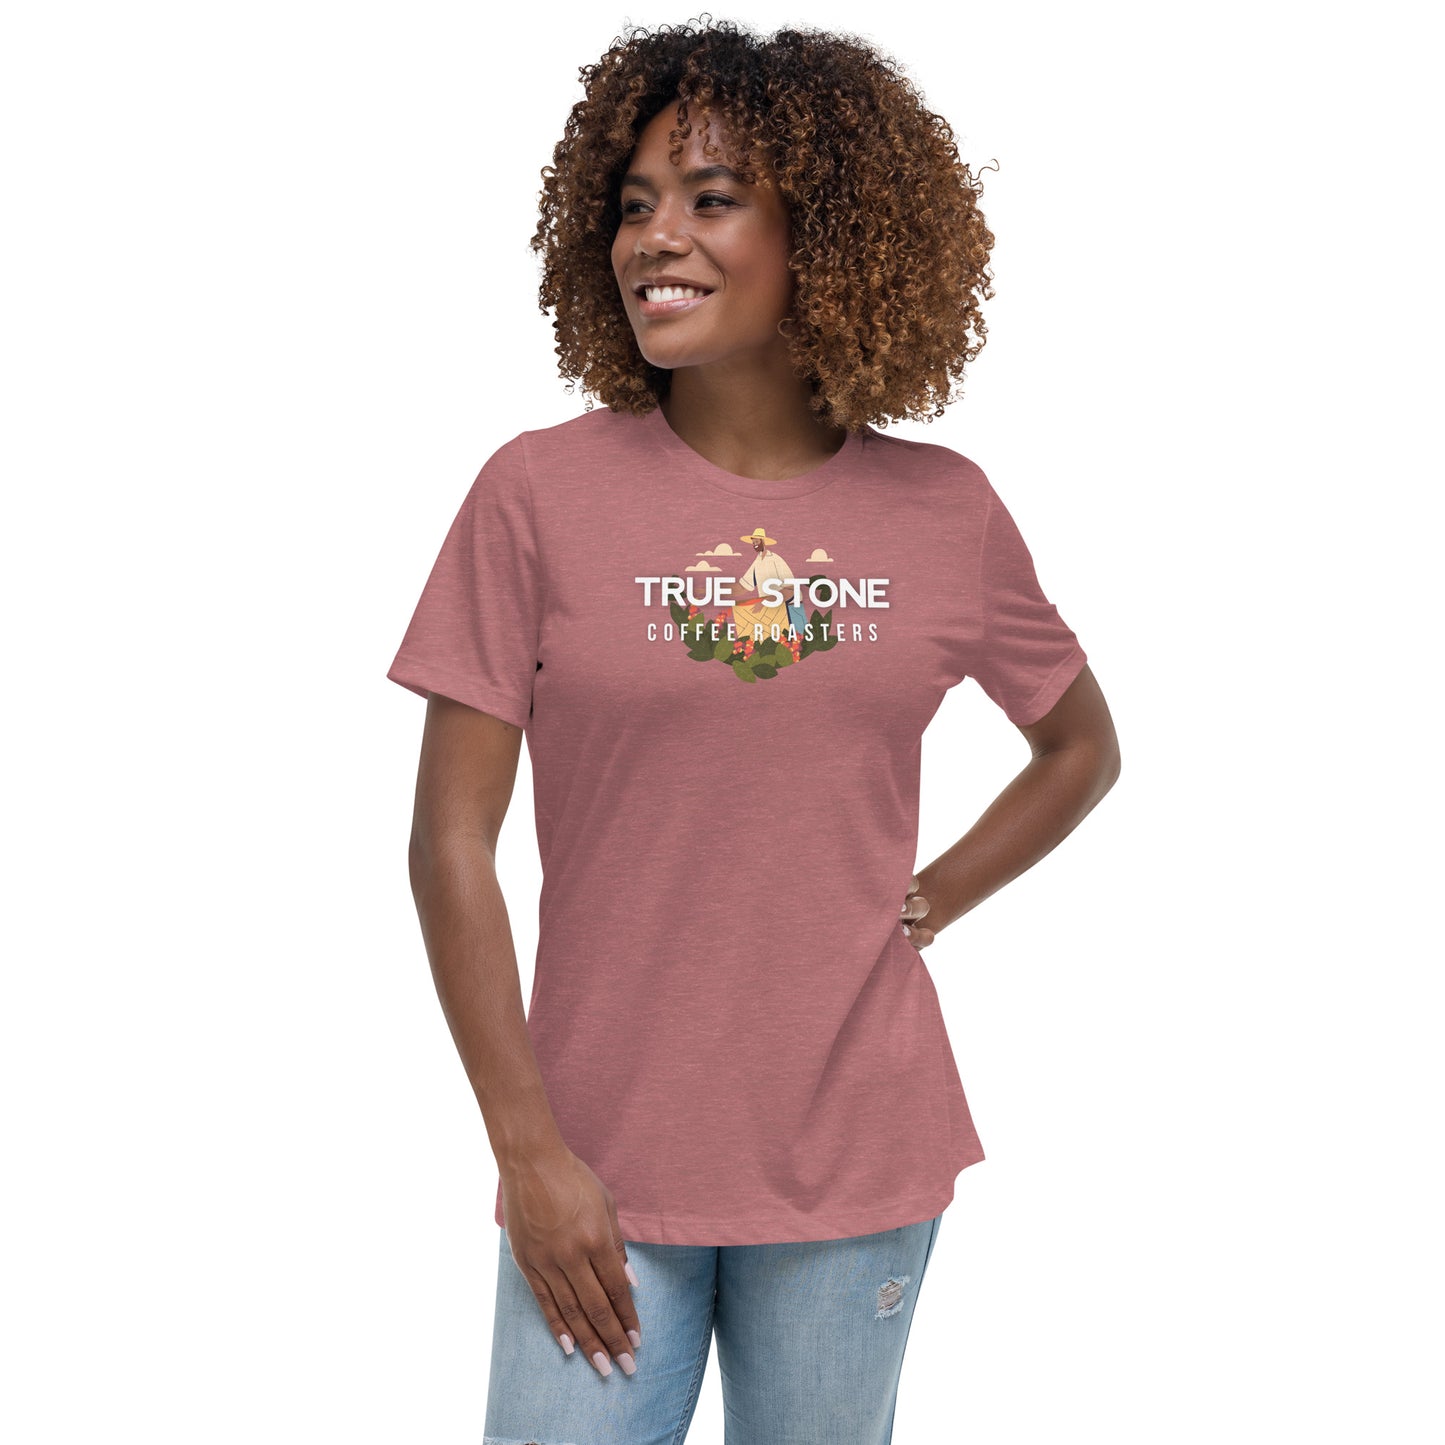 True Stone - Women's Relaxed T-Shirt